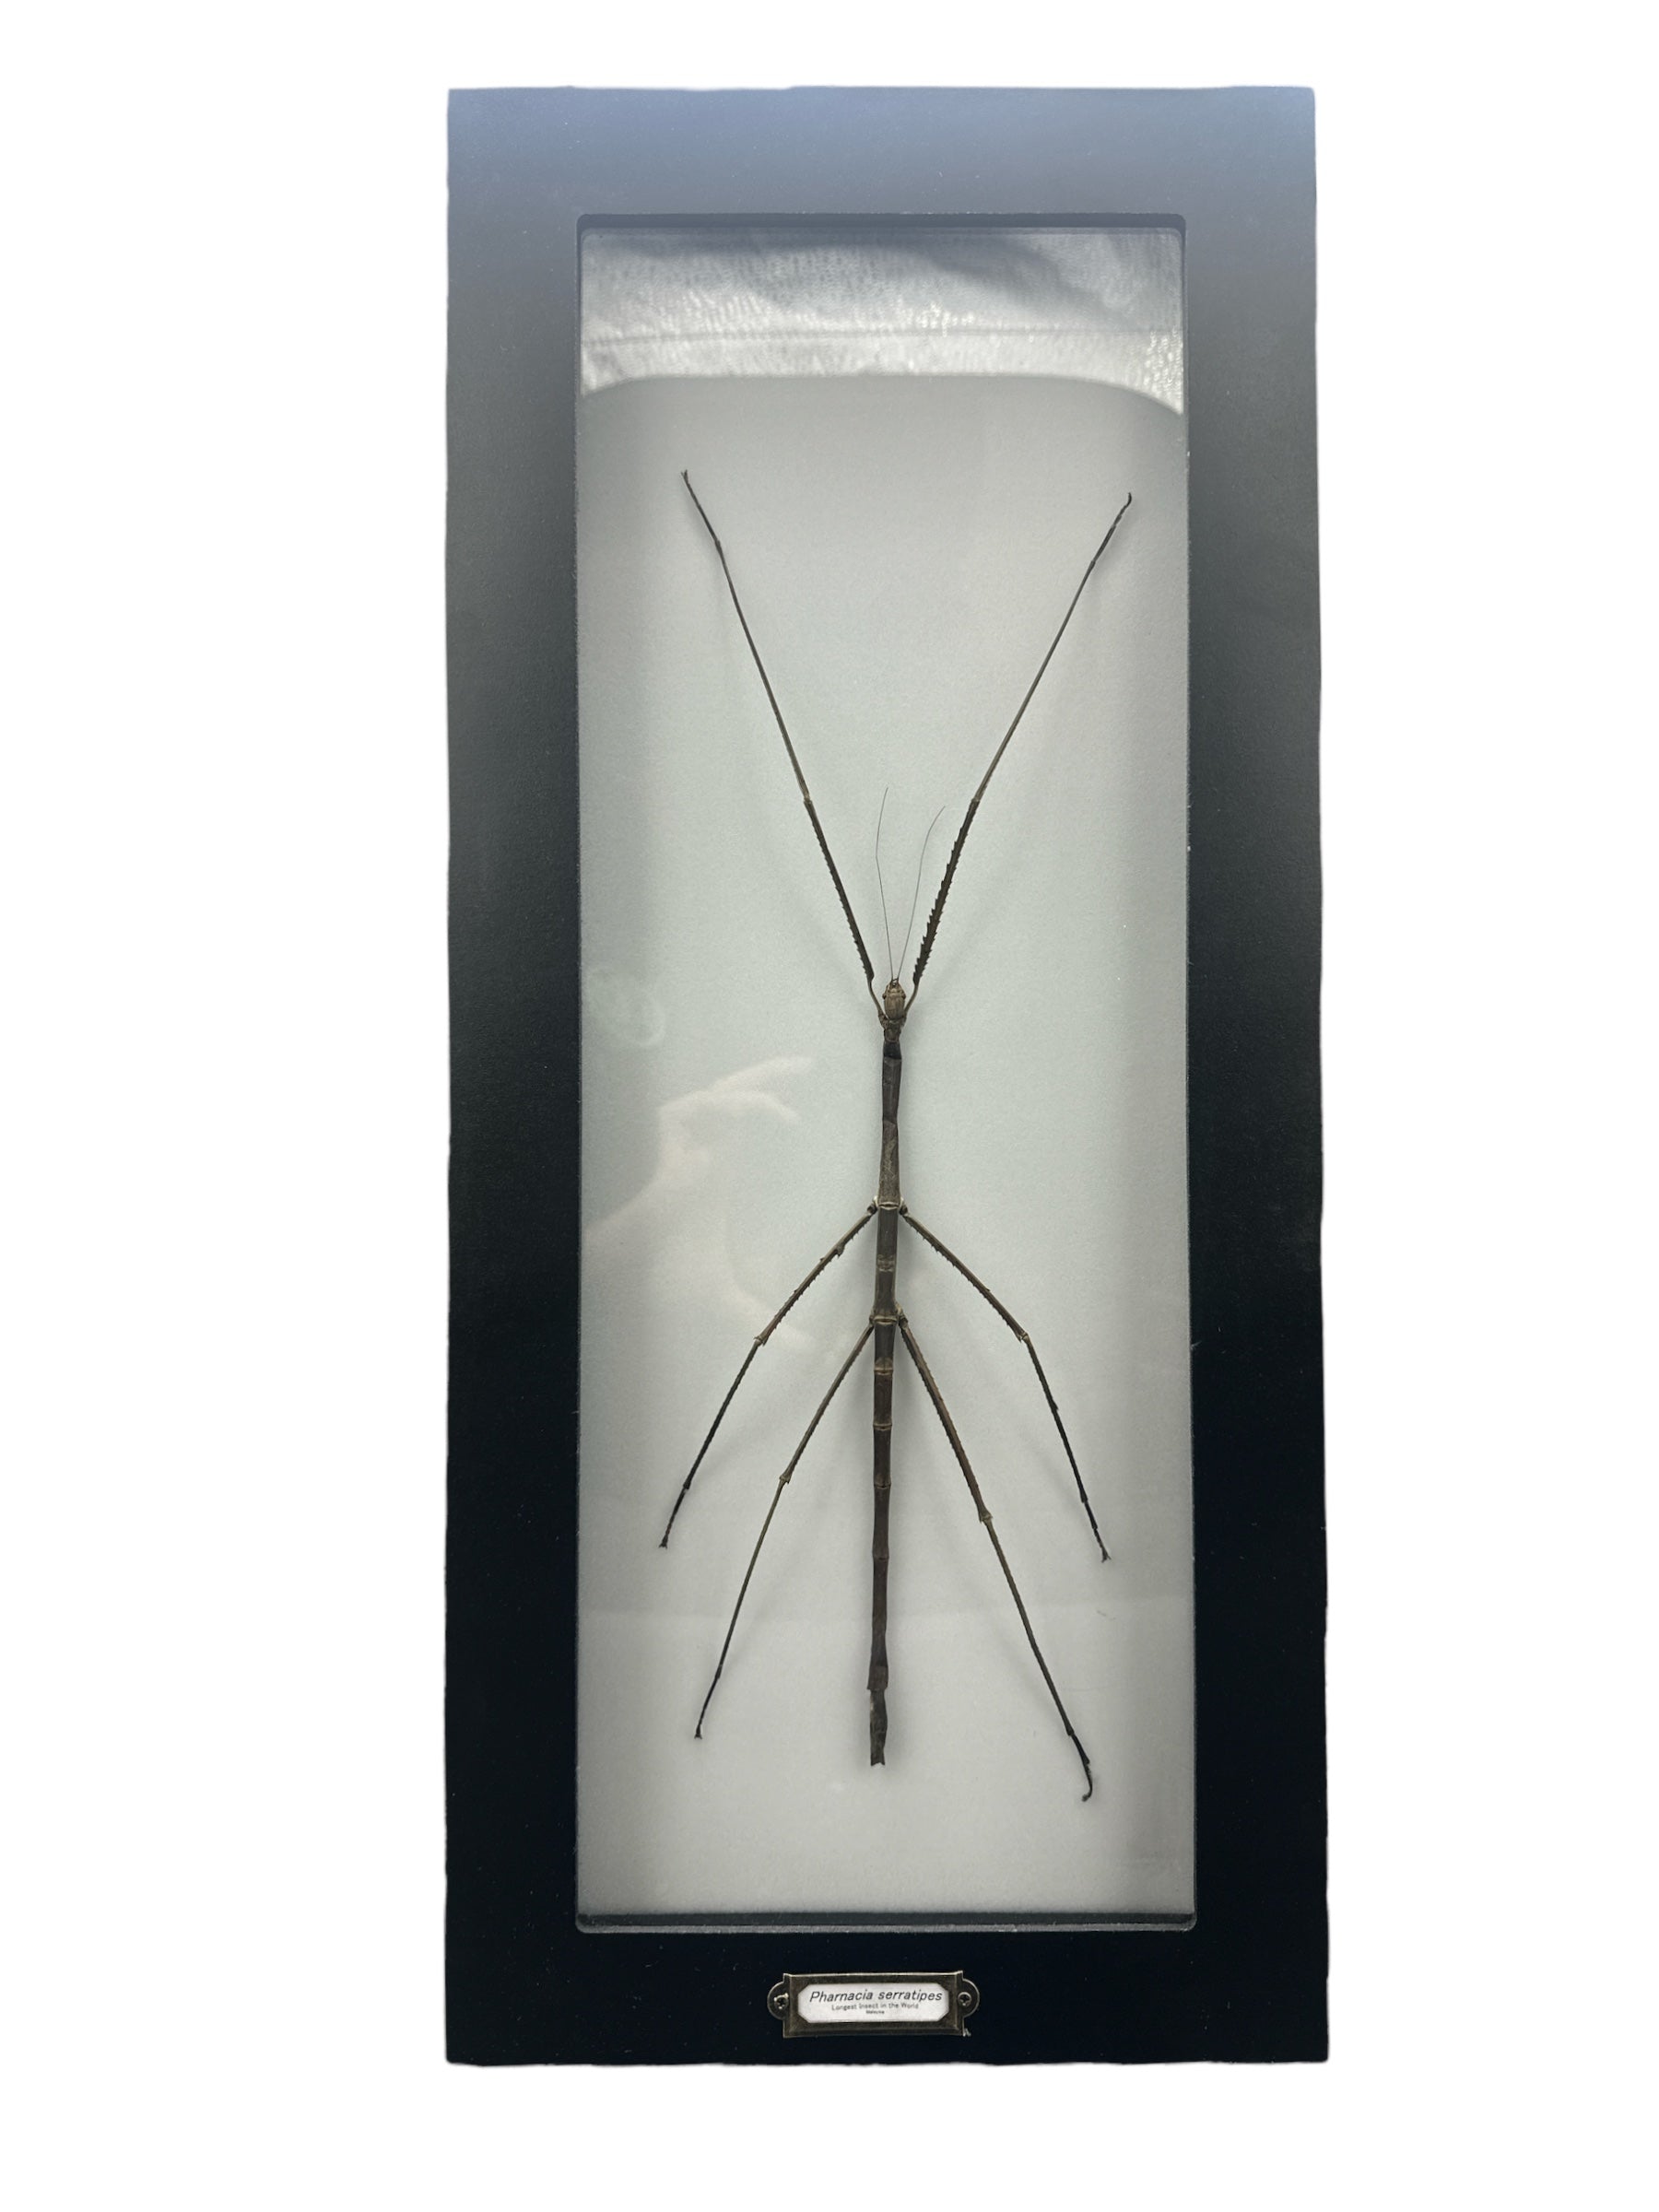 Giant Stick Insect (Pharnacia serratipes) - 6x19" Frame